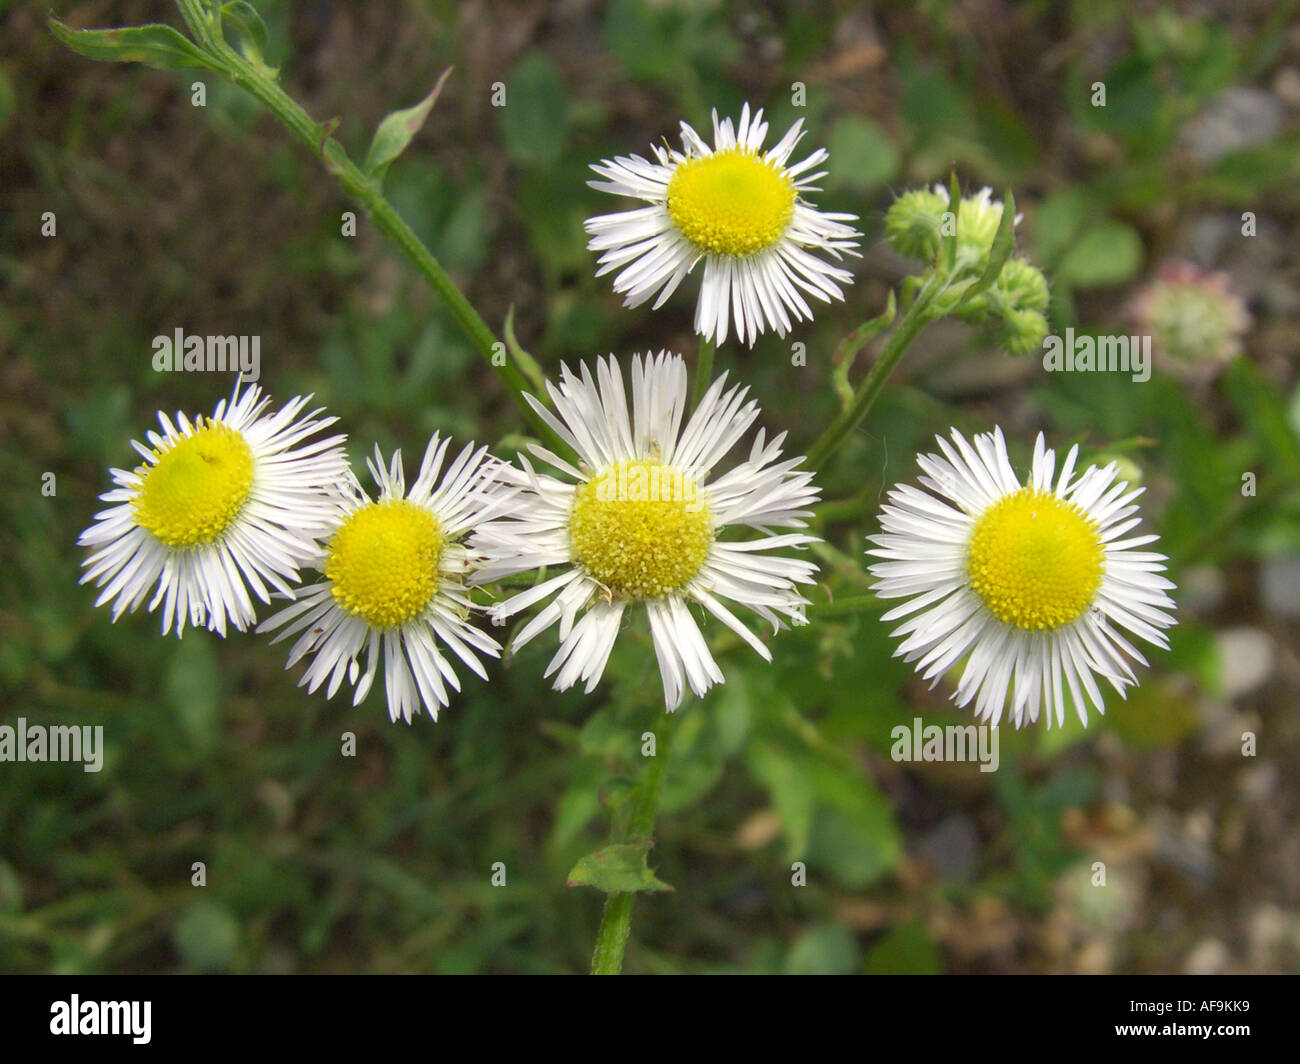 annual fleabane, daisy fleabane, sweet scabious, Eastern daisy fleabane, white-top fleabane (Erigeron annuus), inflorescences Stock Photo